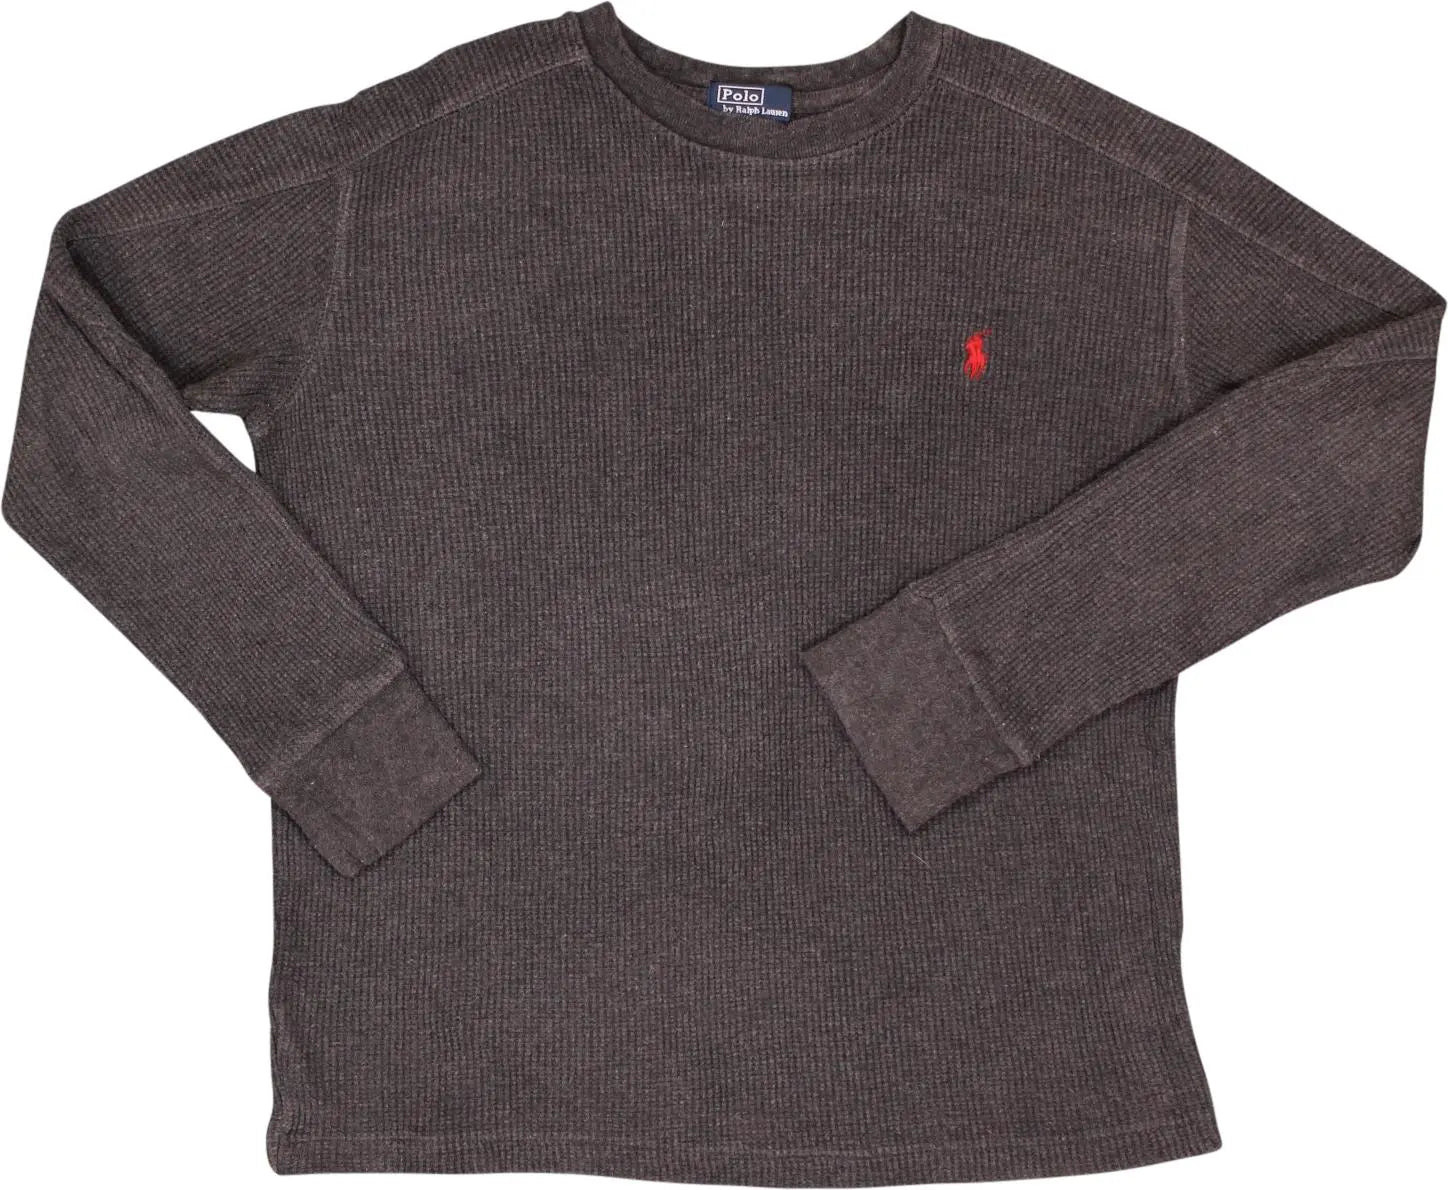 Ralph Lauren - Grey Sweater by Ralph Lauren- ThriftTale.com - Vintage and second handclothing